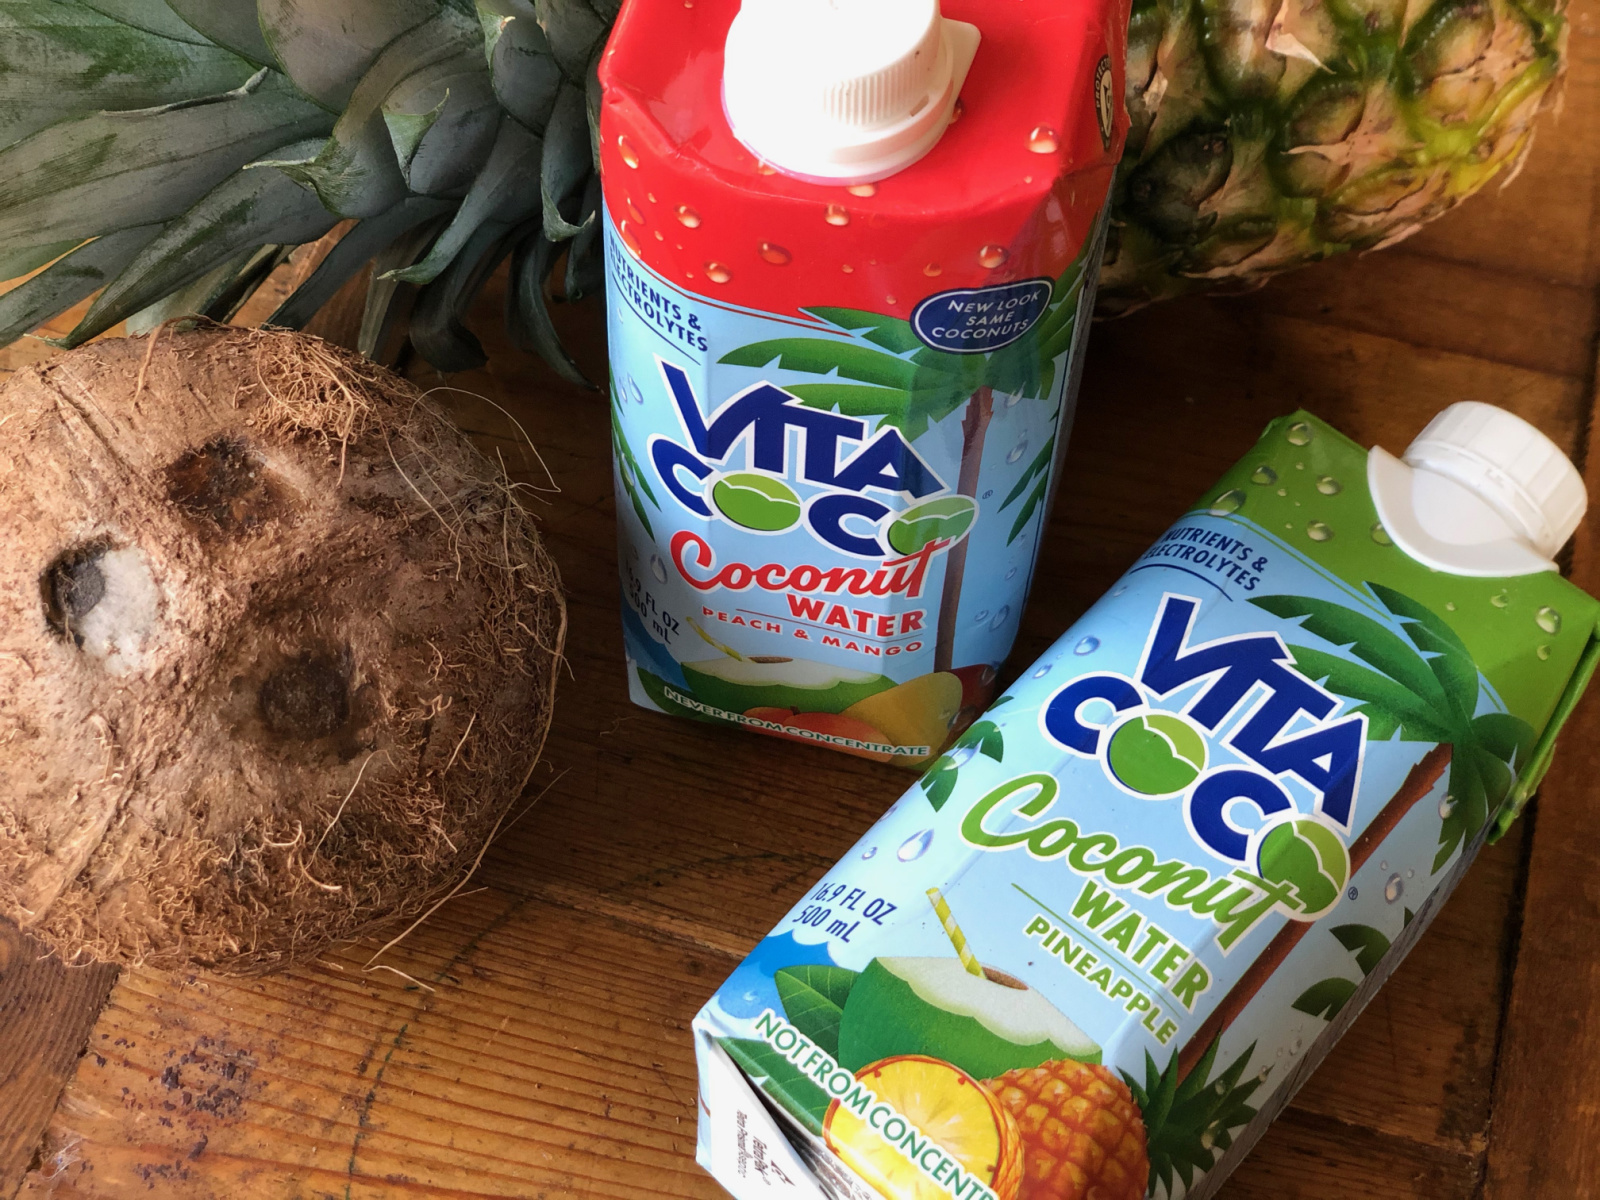 Vita Coco Coconut Water Is Just $1.49 At Kroger – Half Price